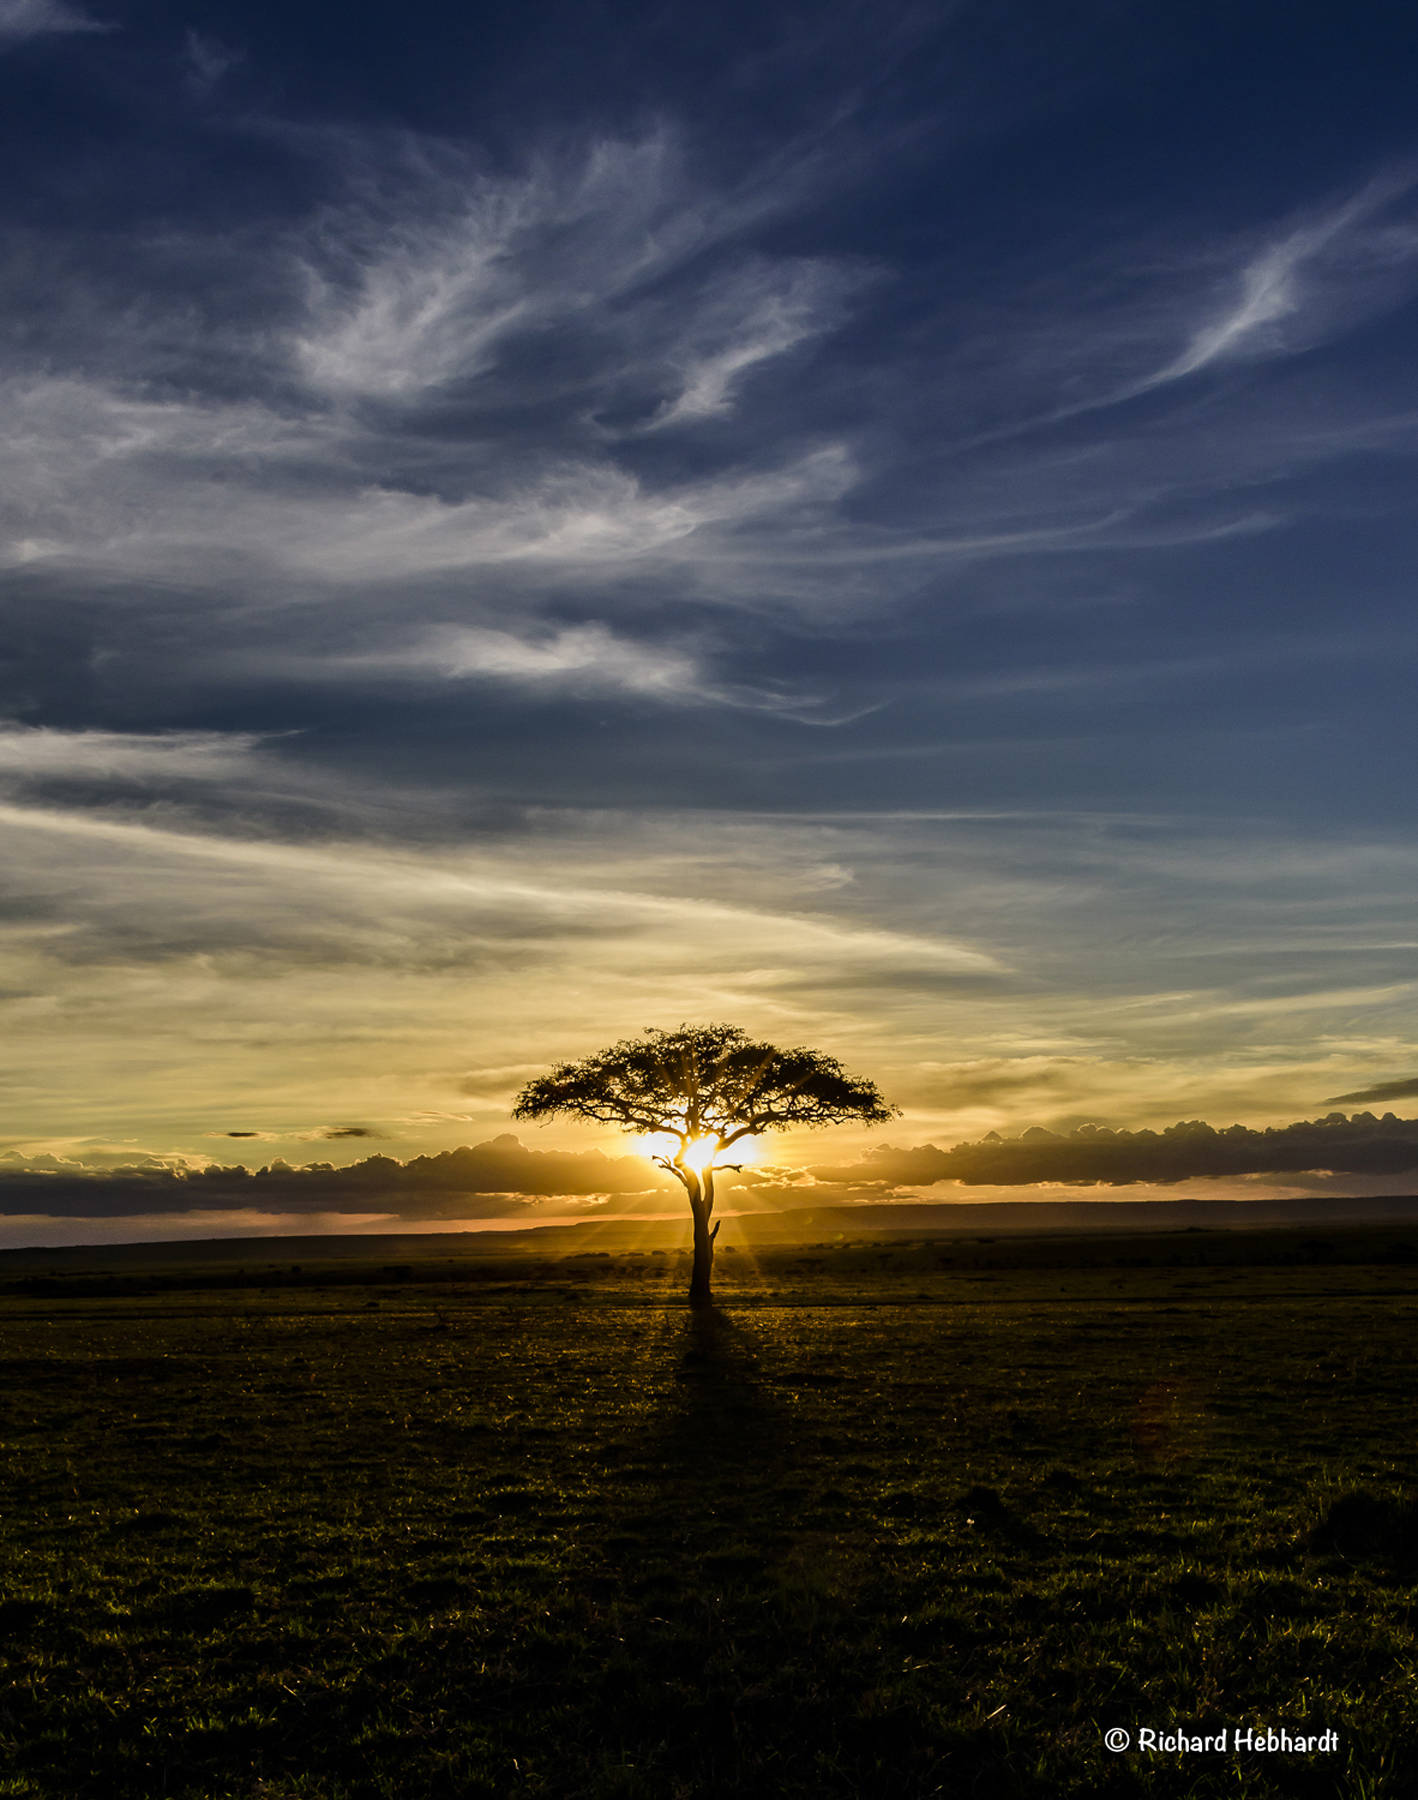 The last light as seen through the lone acacia tree for miles on Kenya’s Maasai Mara National Reserve. (Photo by Richard Hebhardt)